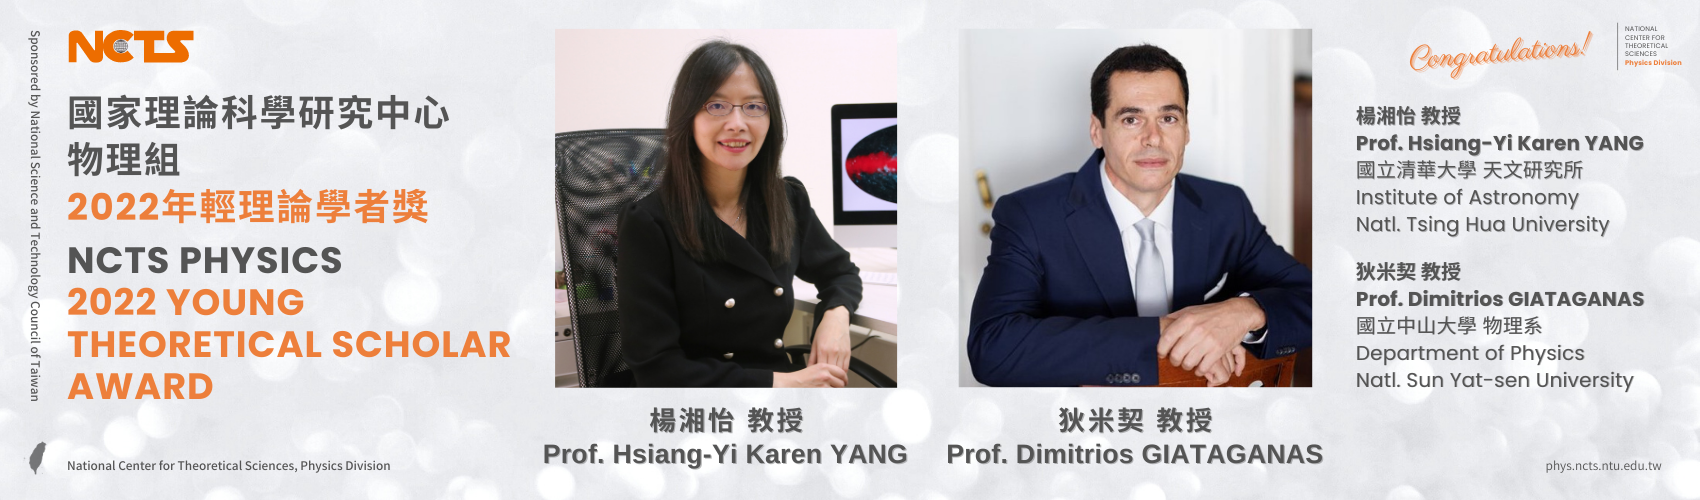 NCTS Congratulates Profs. Hsiang-Yi Karen Yang & Dimitrios Giataganas on Winning 2022 Young Theoretical Scholar Award